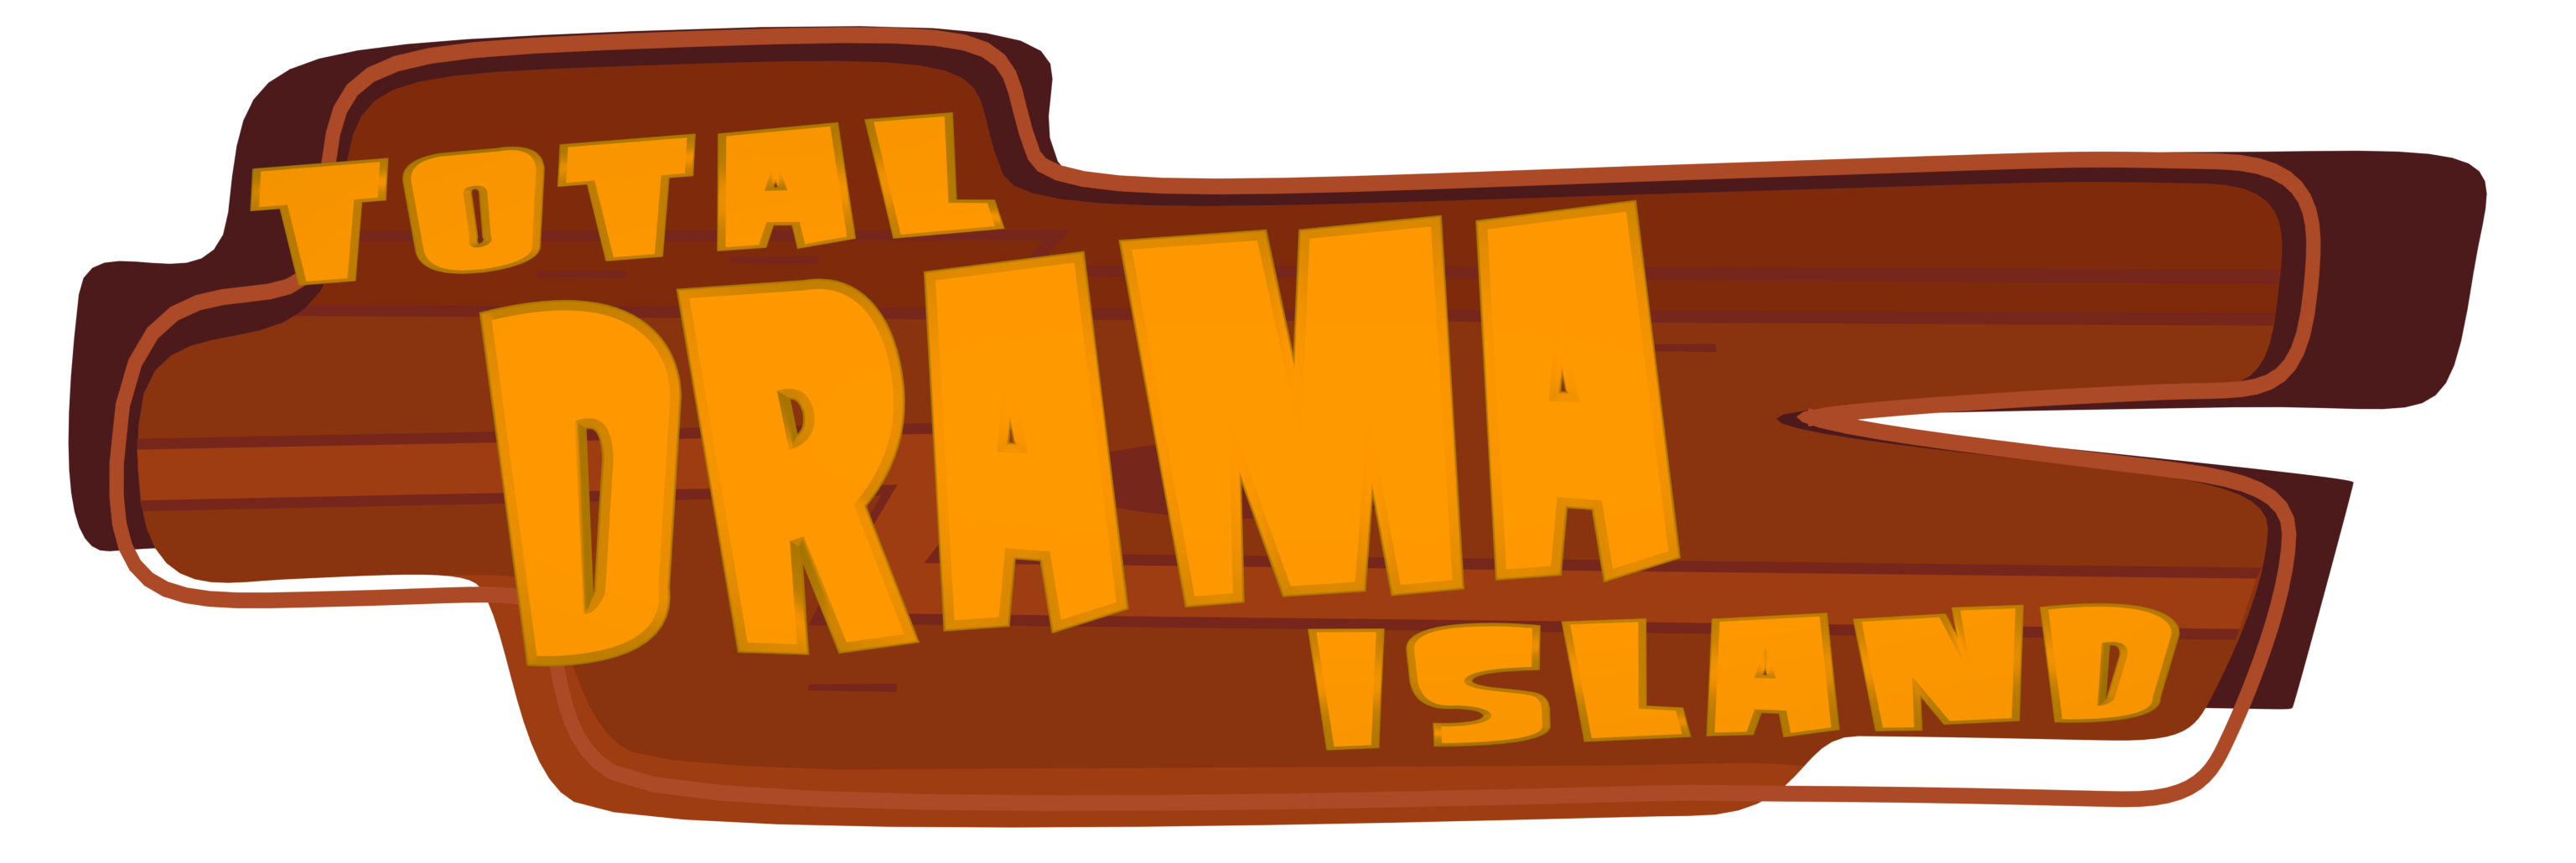 Total Drama Island Logo Remake (Campfire Sign) by BraydenNohaiDeviant ...